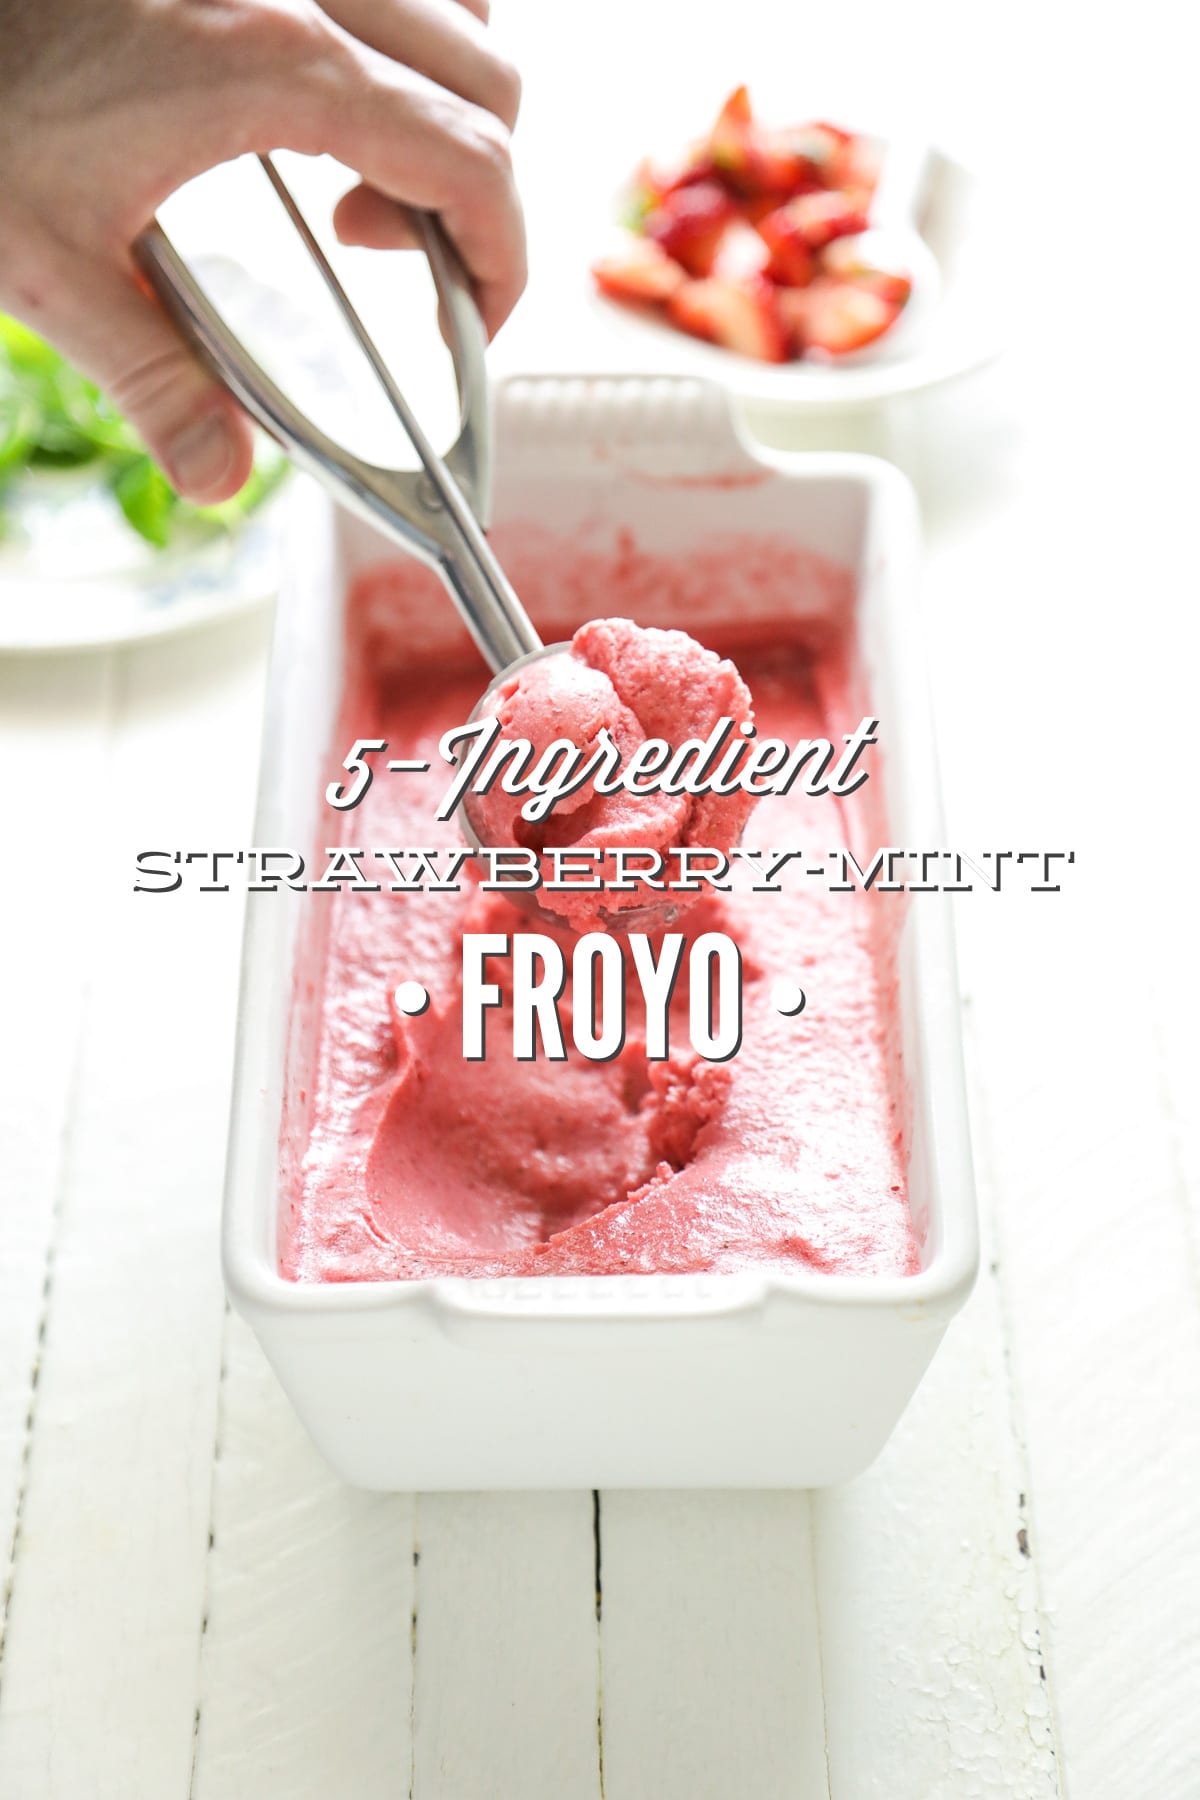 5-Ingredient Strawberry-Mint Froyo (Homemade Frozen Yogurt)